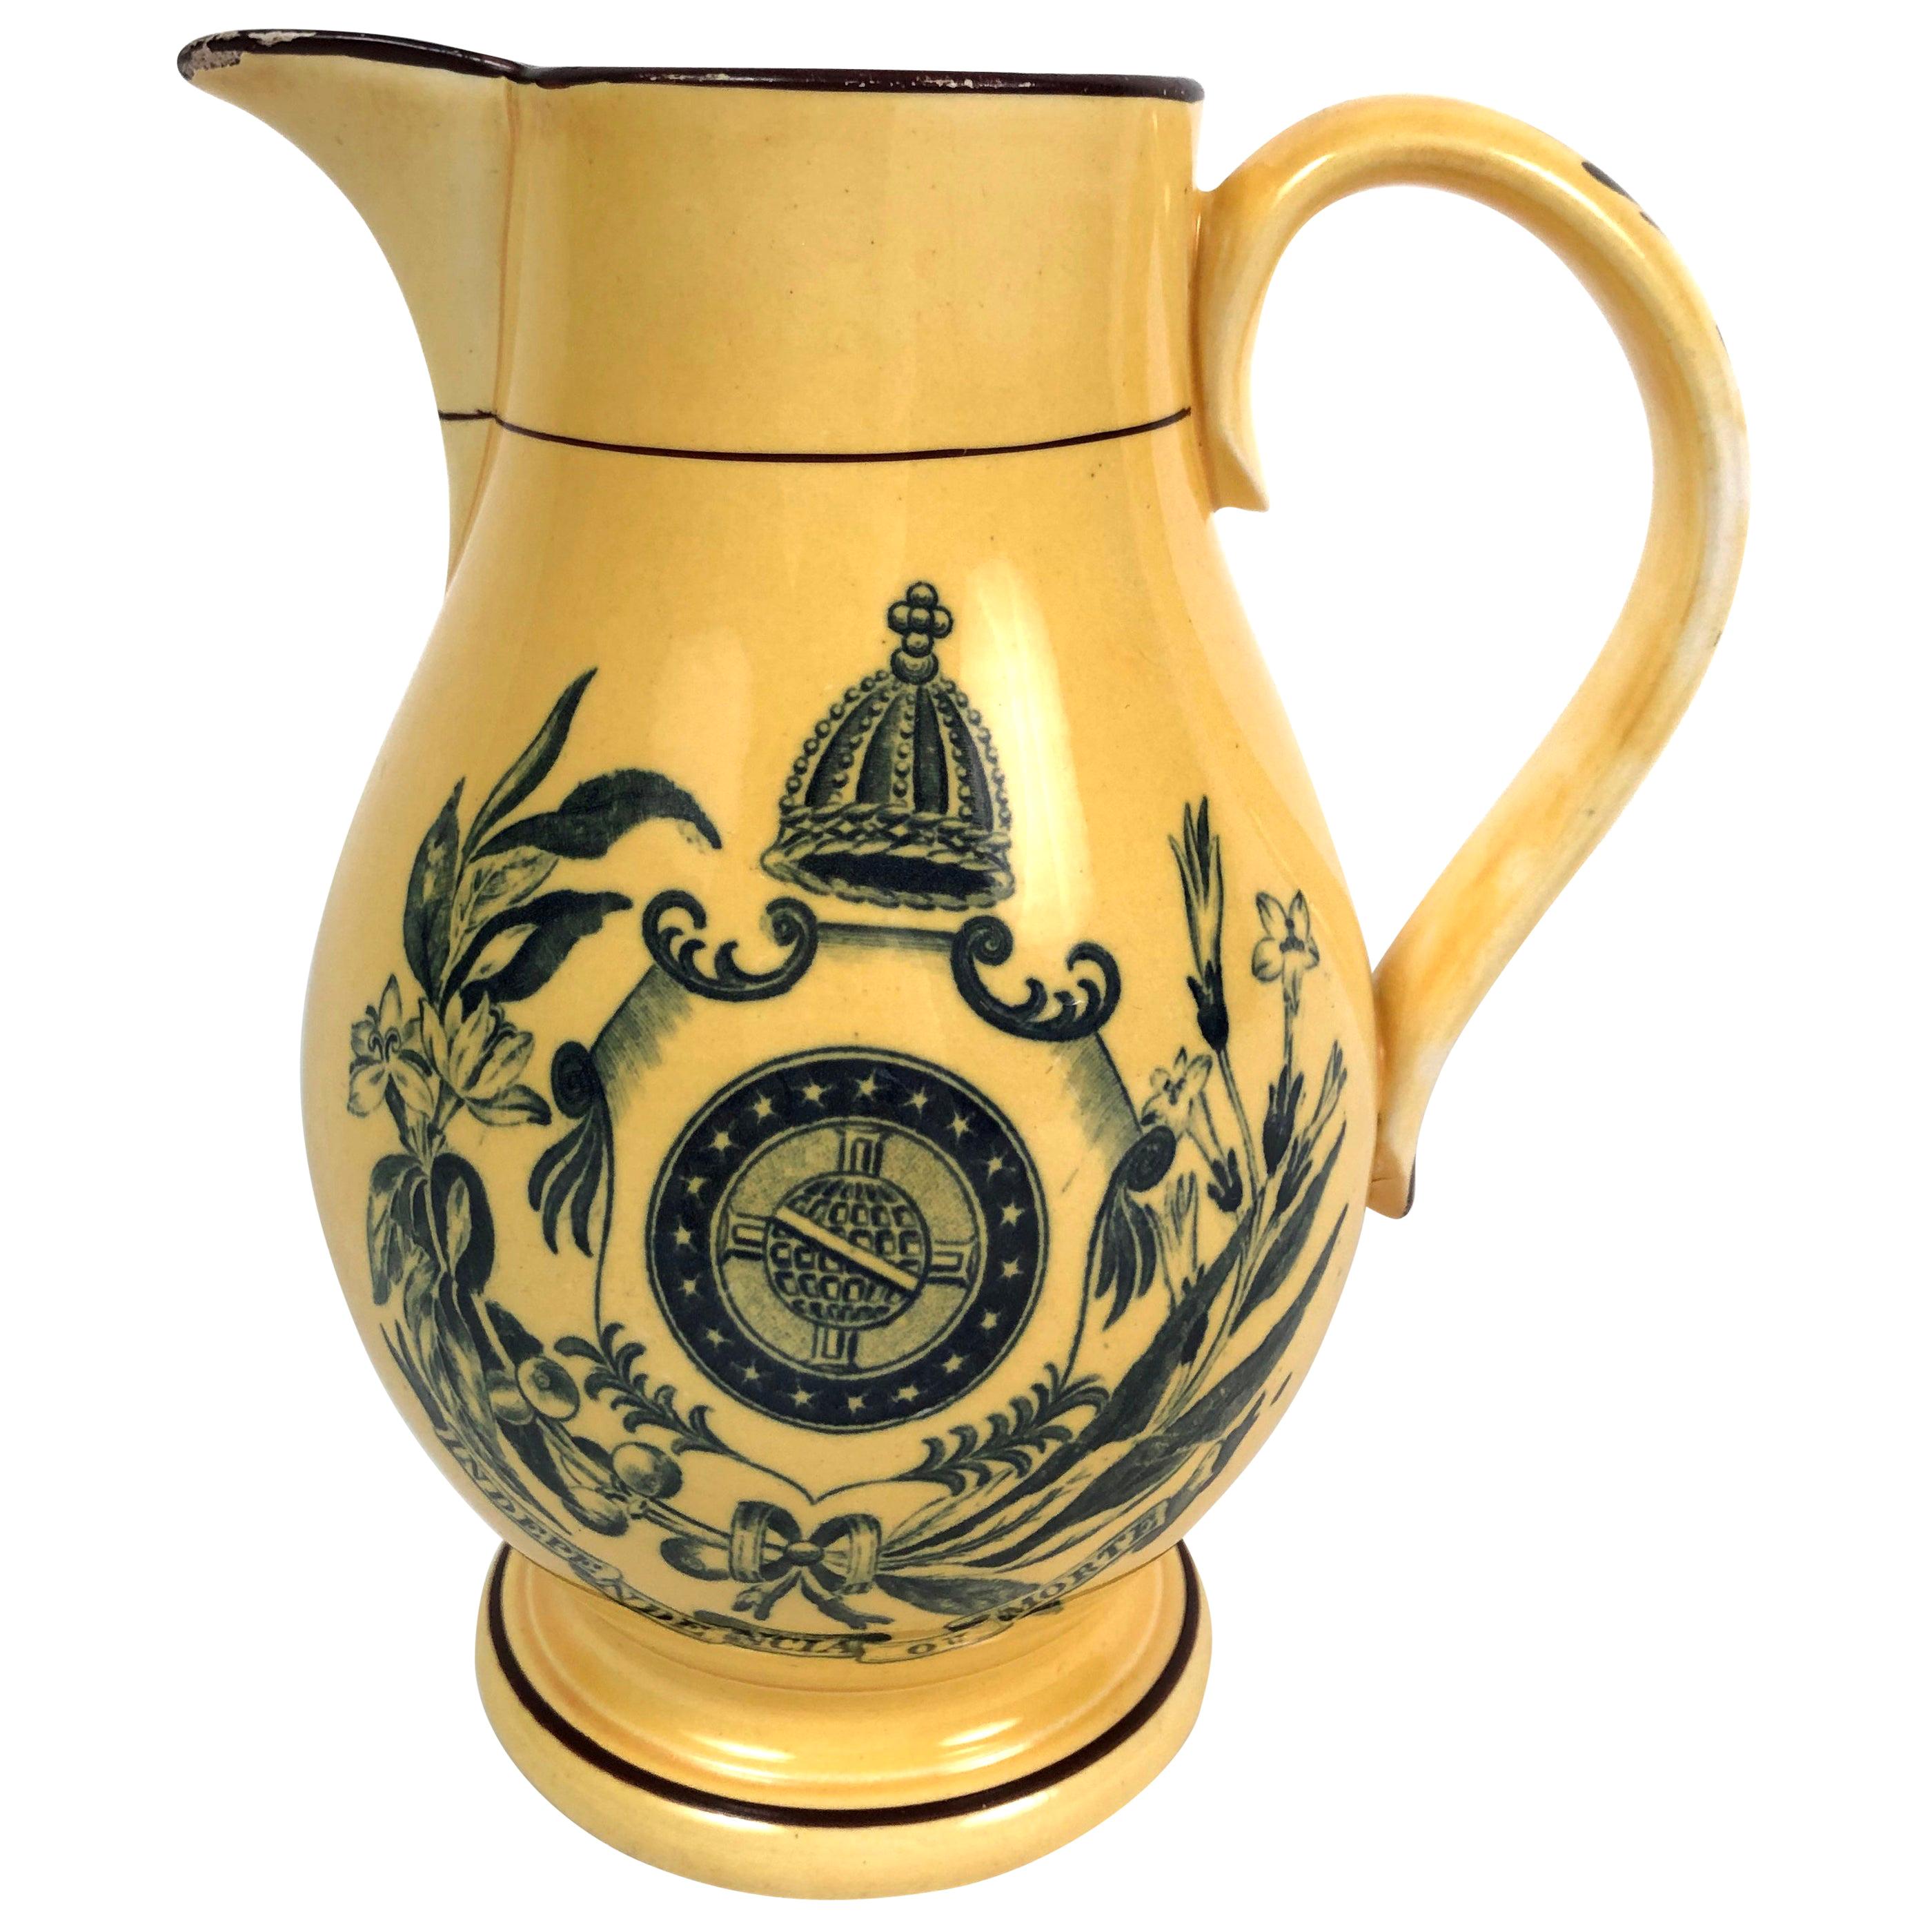 Yellow Glazed Staffordshire Pottery Brazil Independence Pitcher, circa 1825